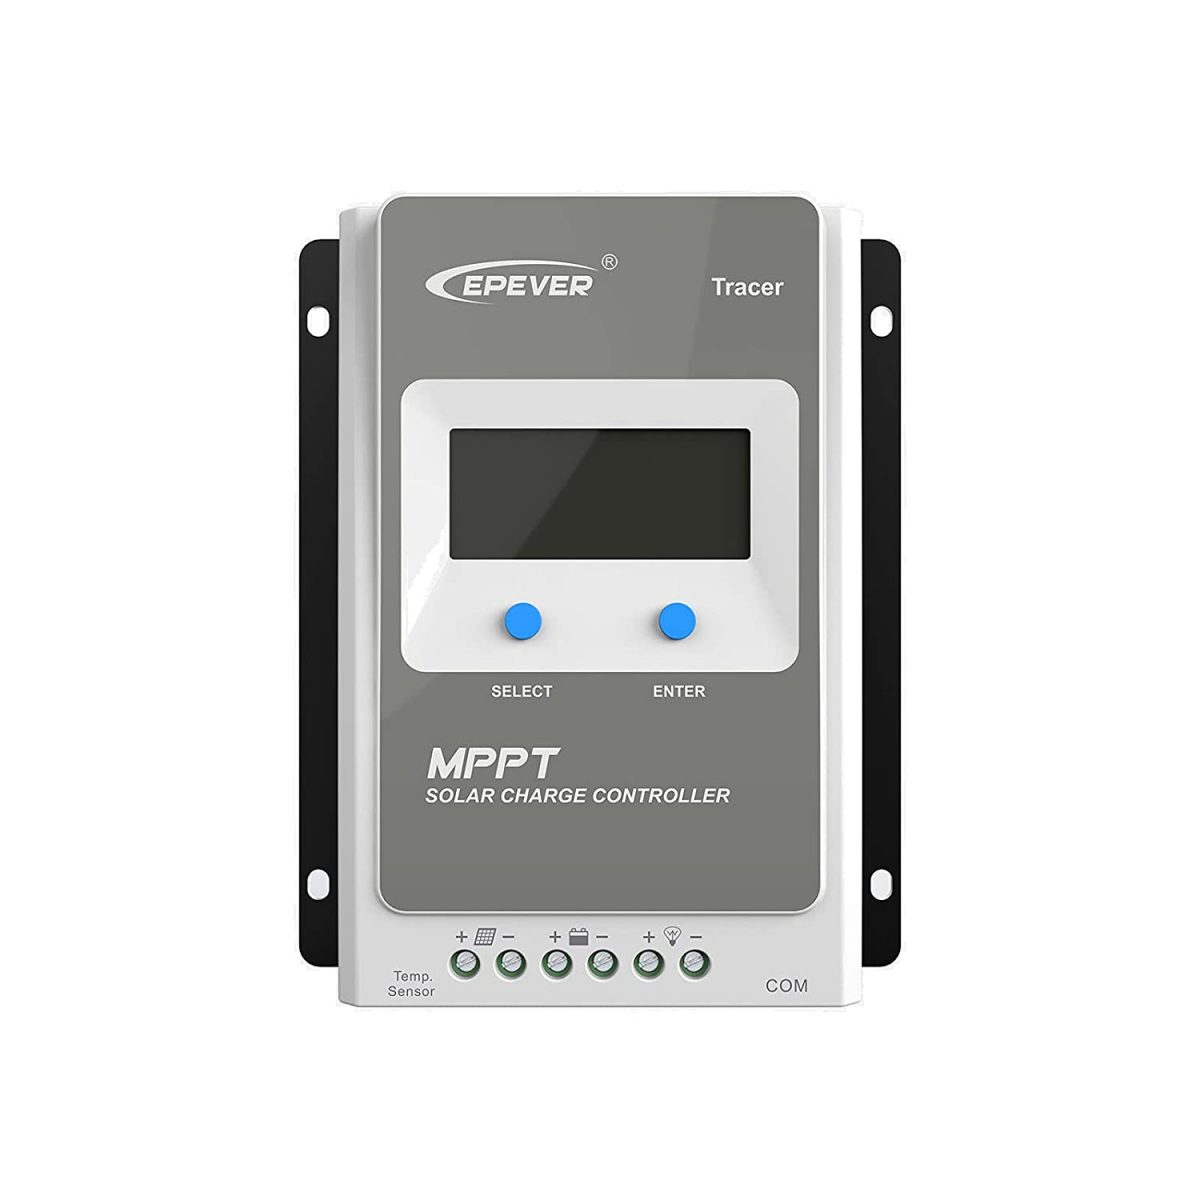 4. Regulador Epever MPPT Tracer 30A